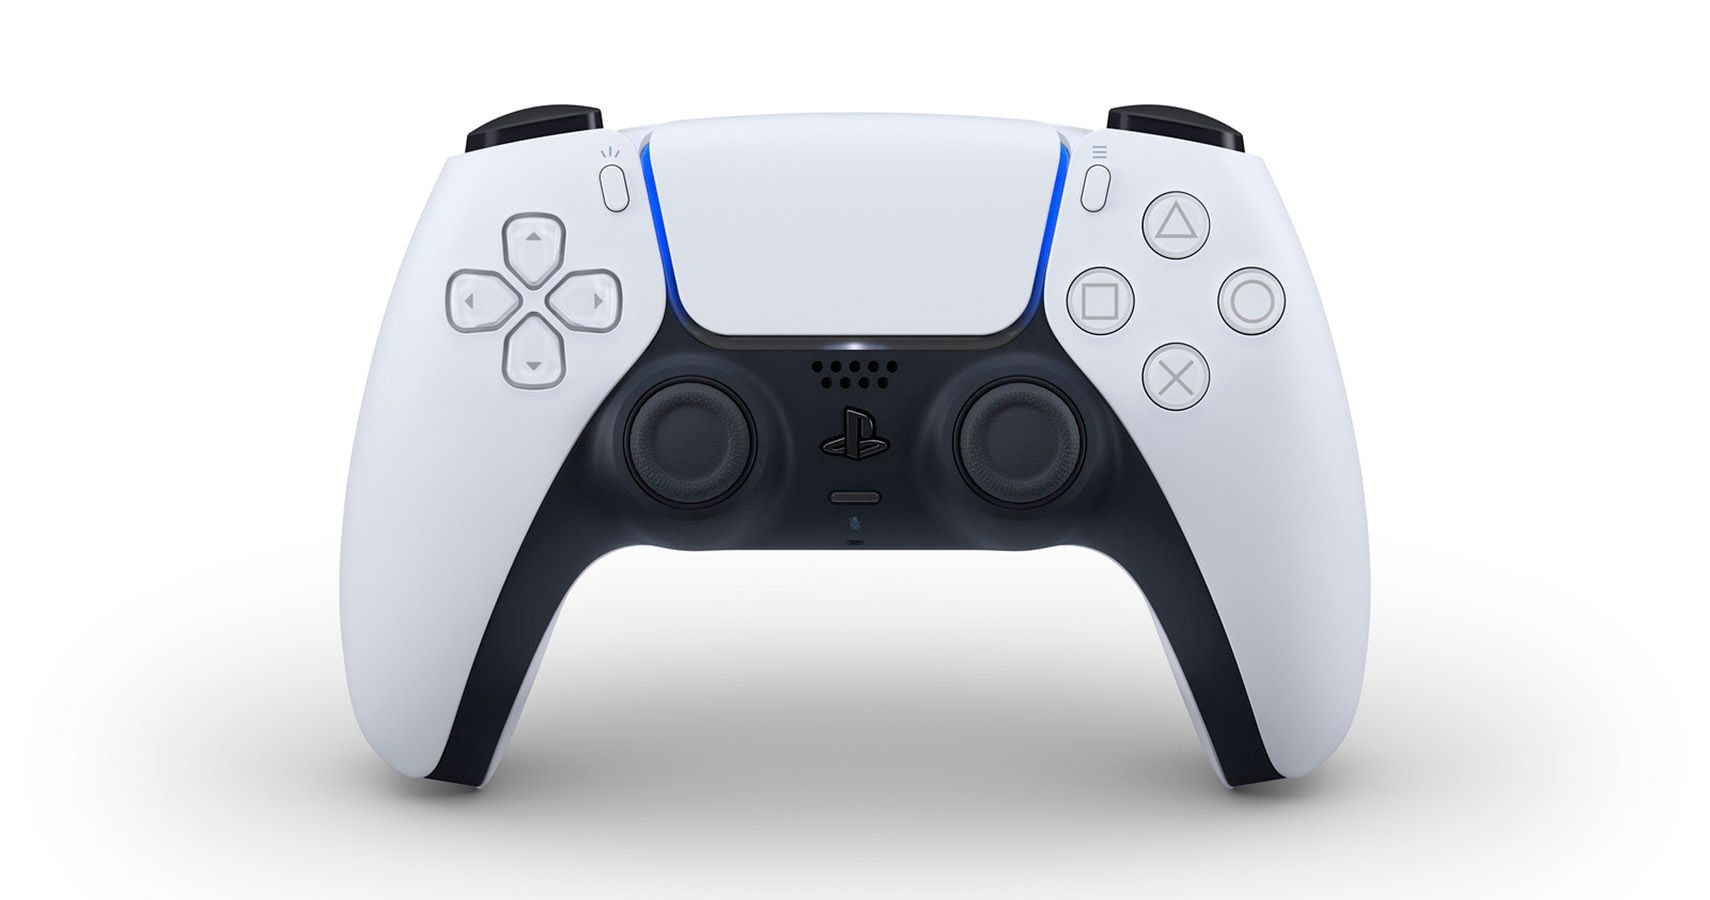 The DualSense haptic feedback controller for the PS5